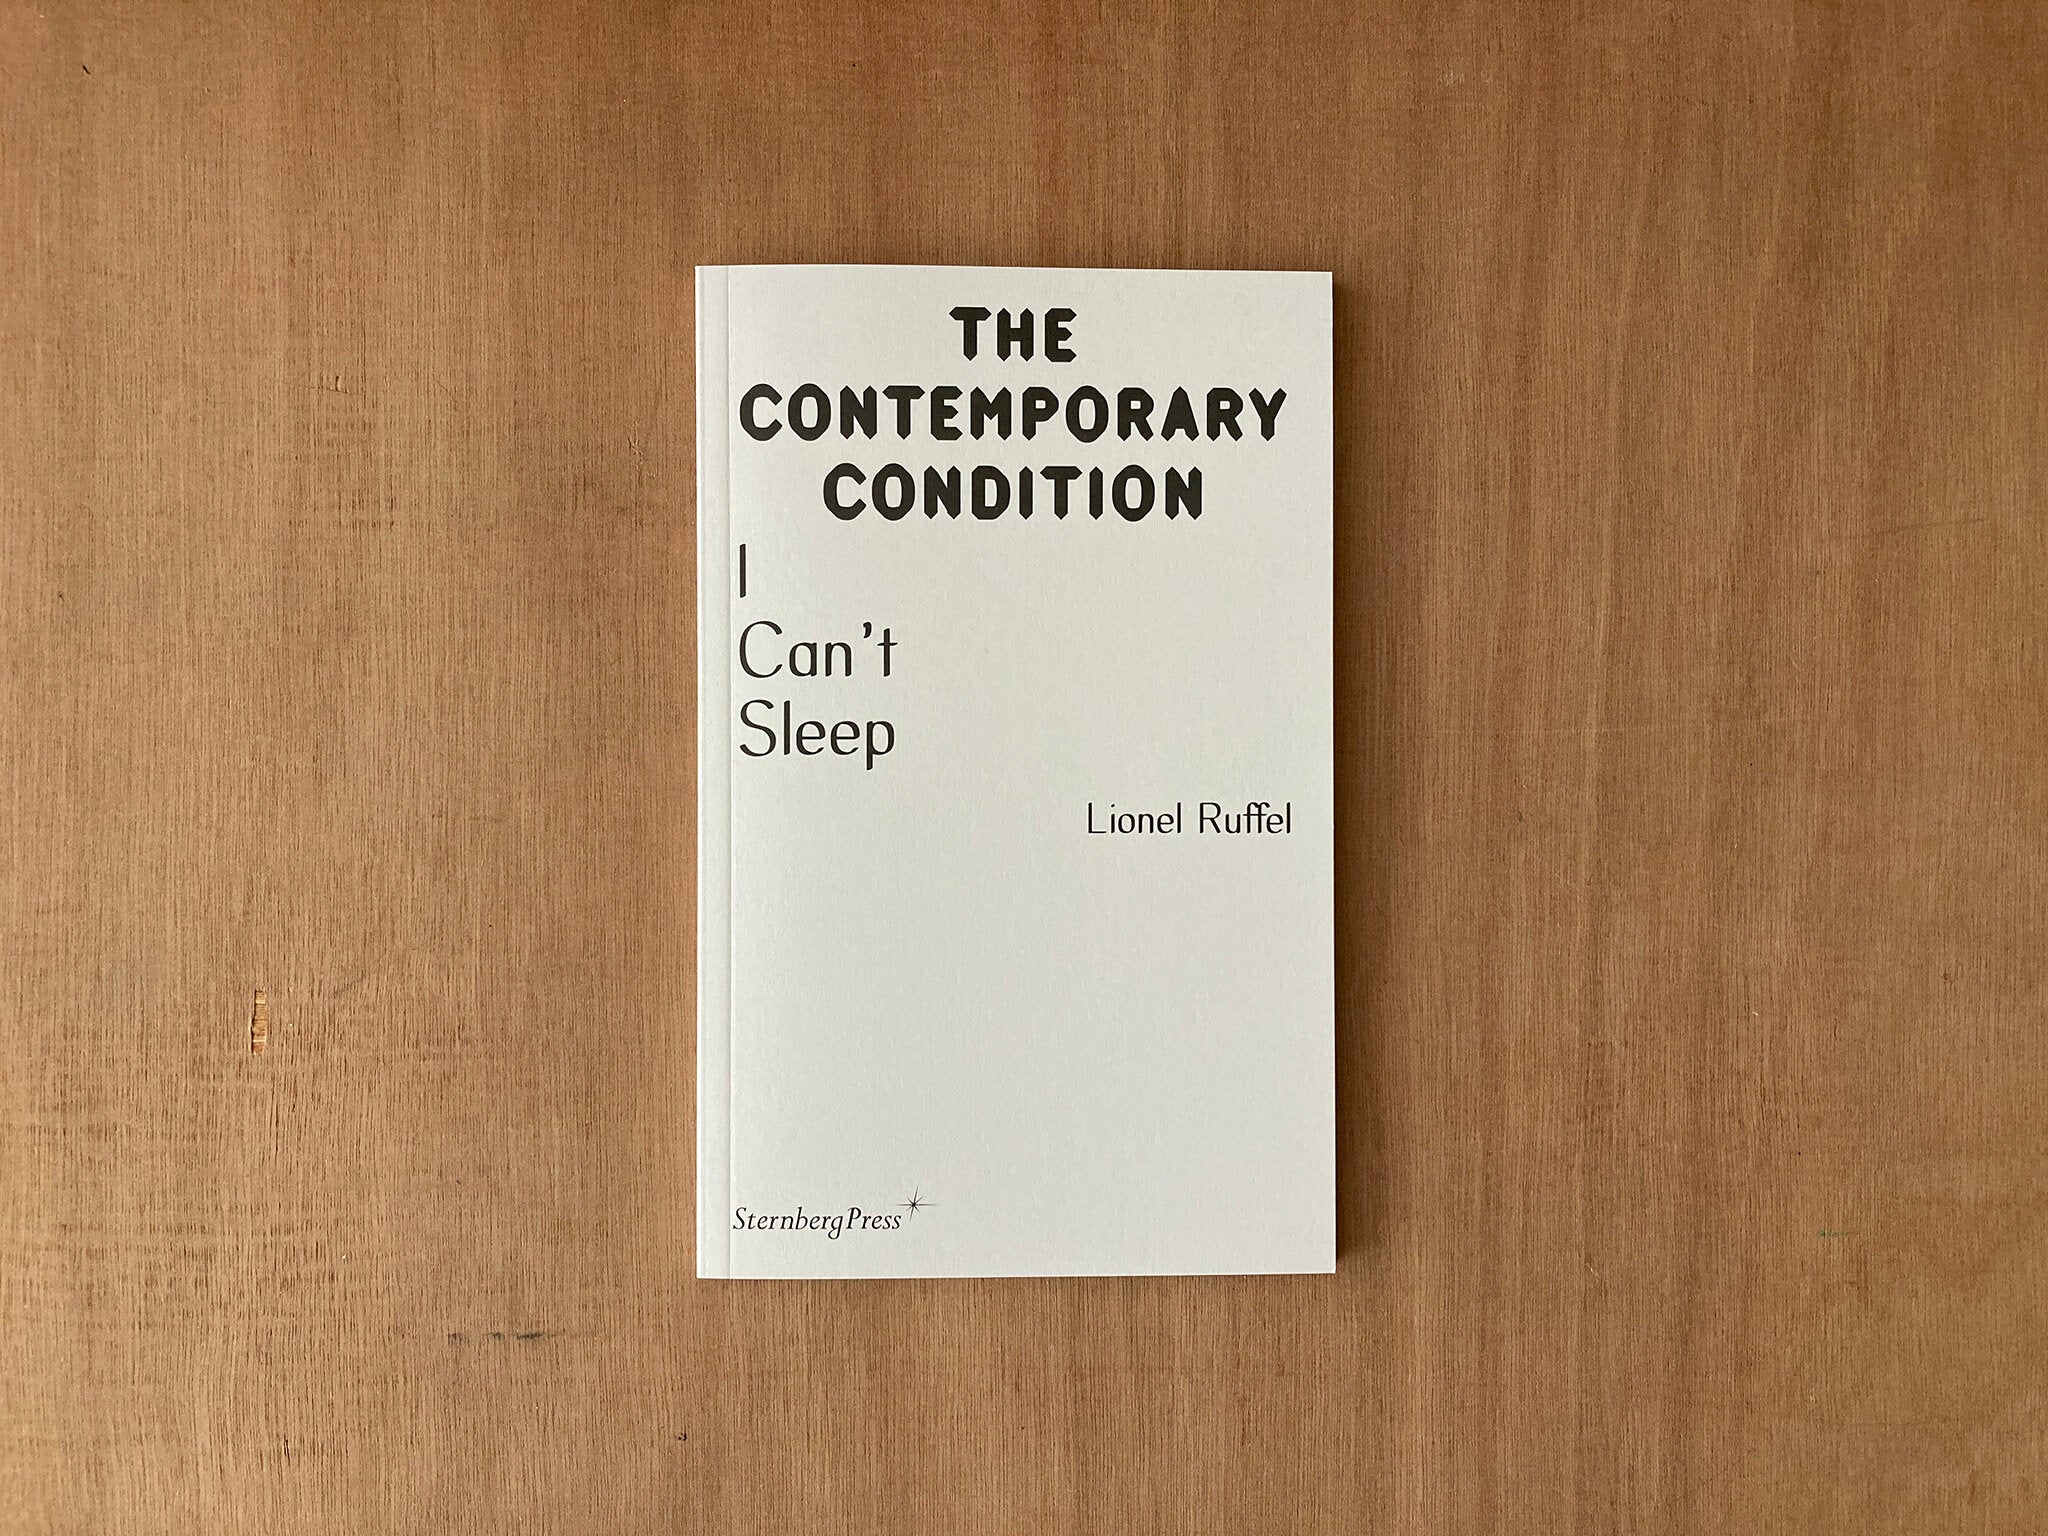 I CAN’T SLEEP by Lionel Ruffel